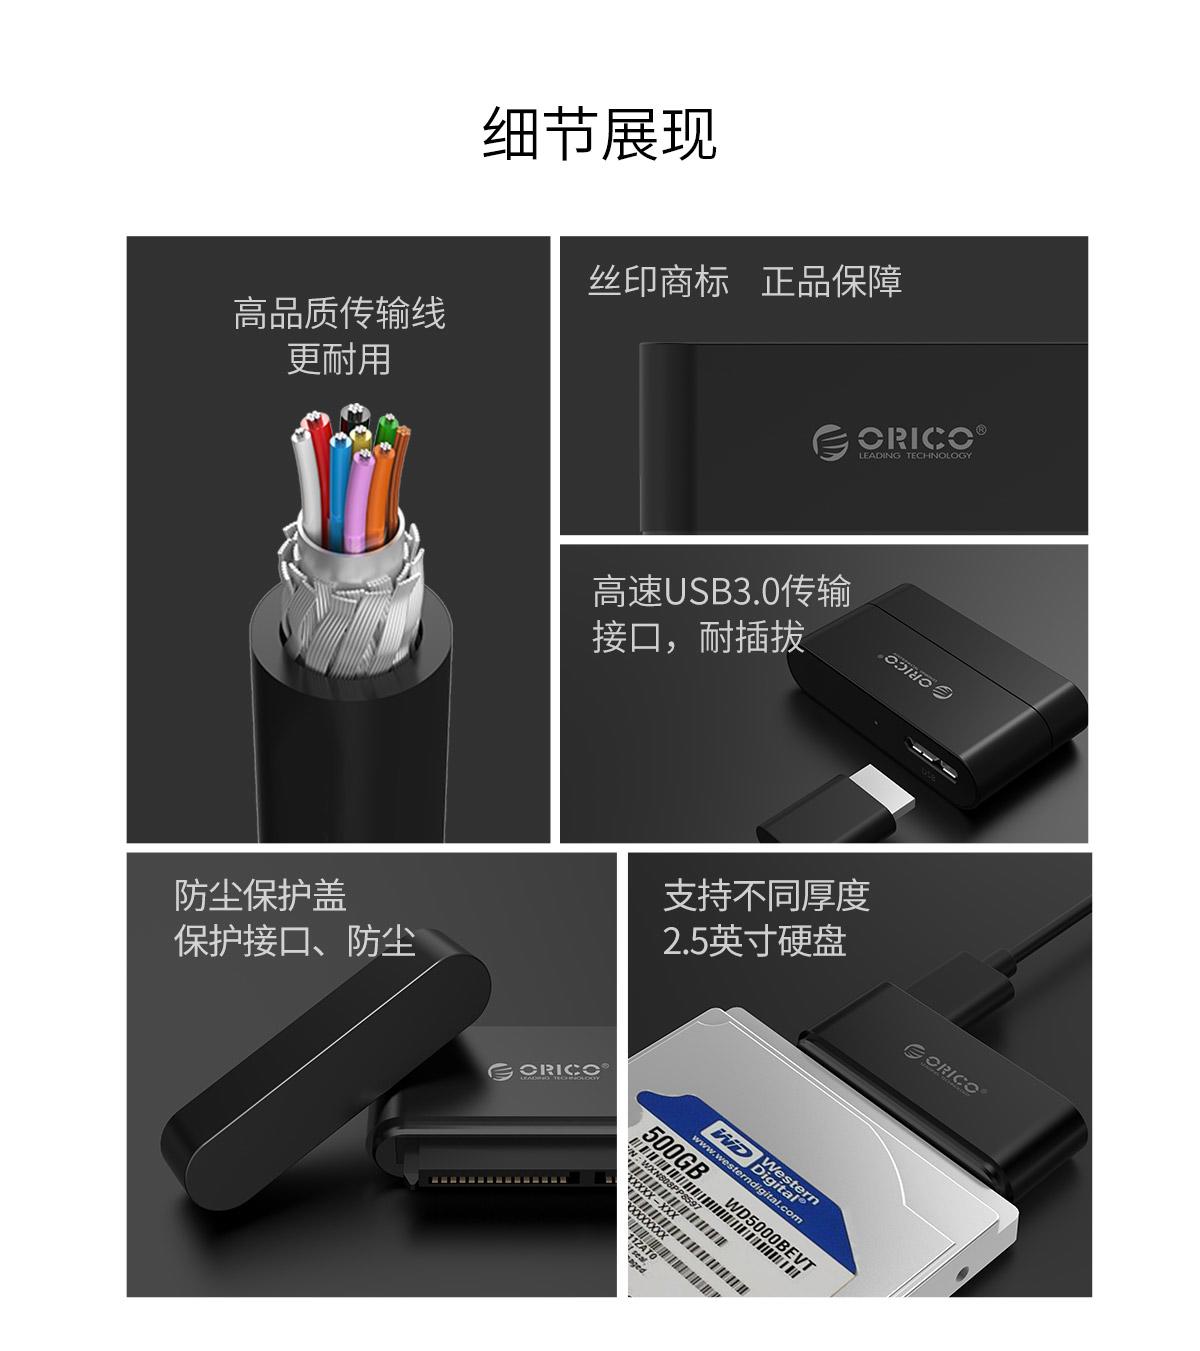 Orico USB3.0 2.5英寸硬盘易驱线细节展示